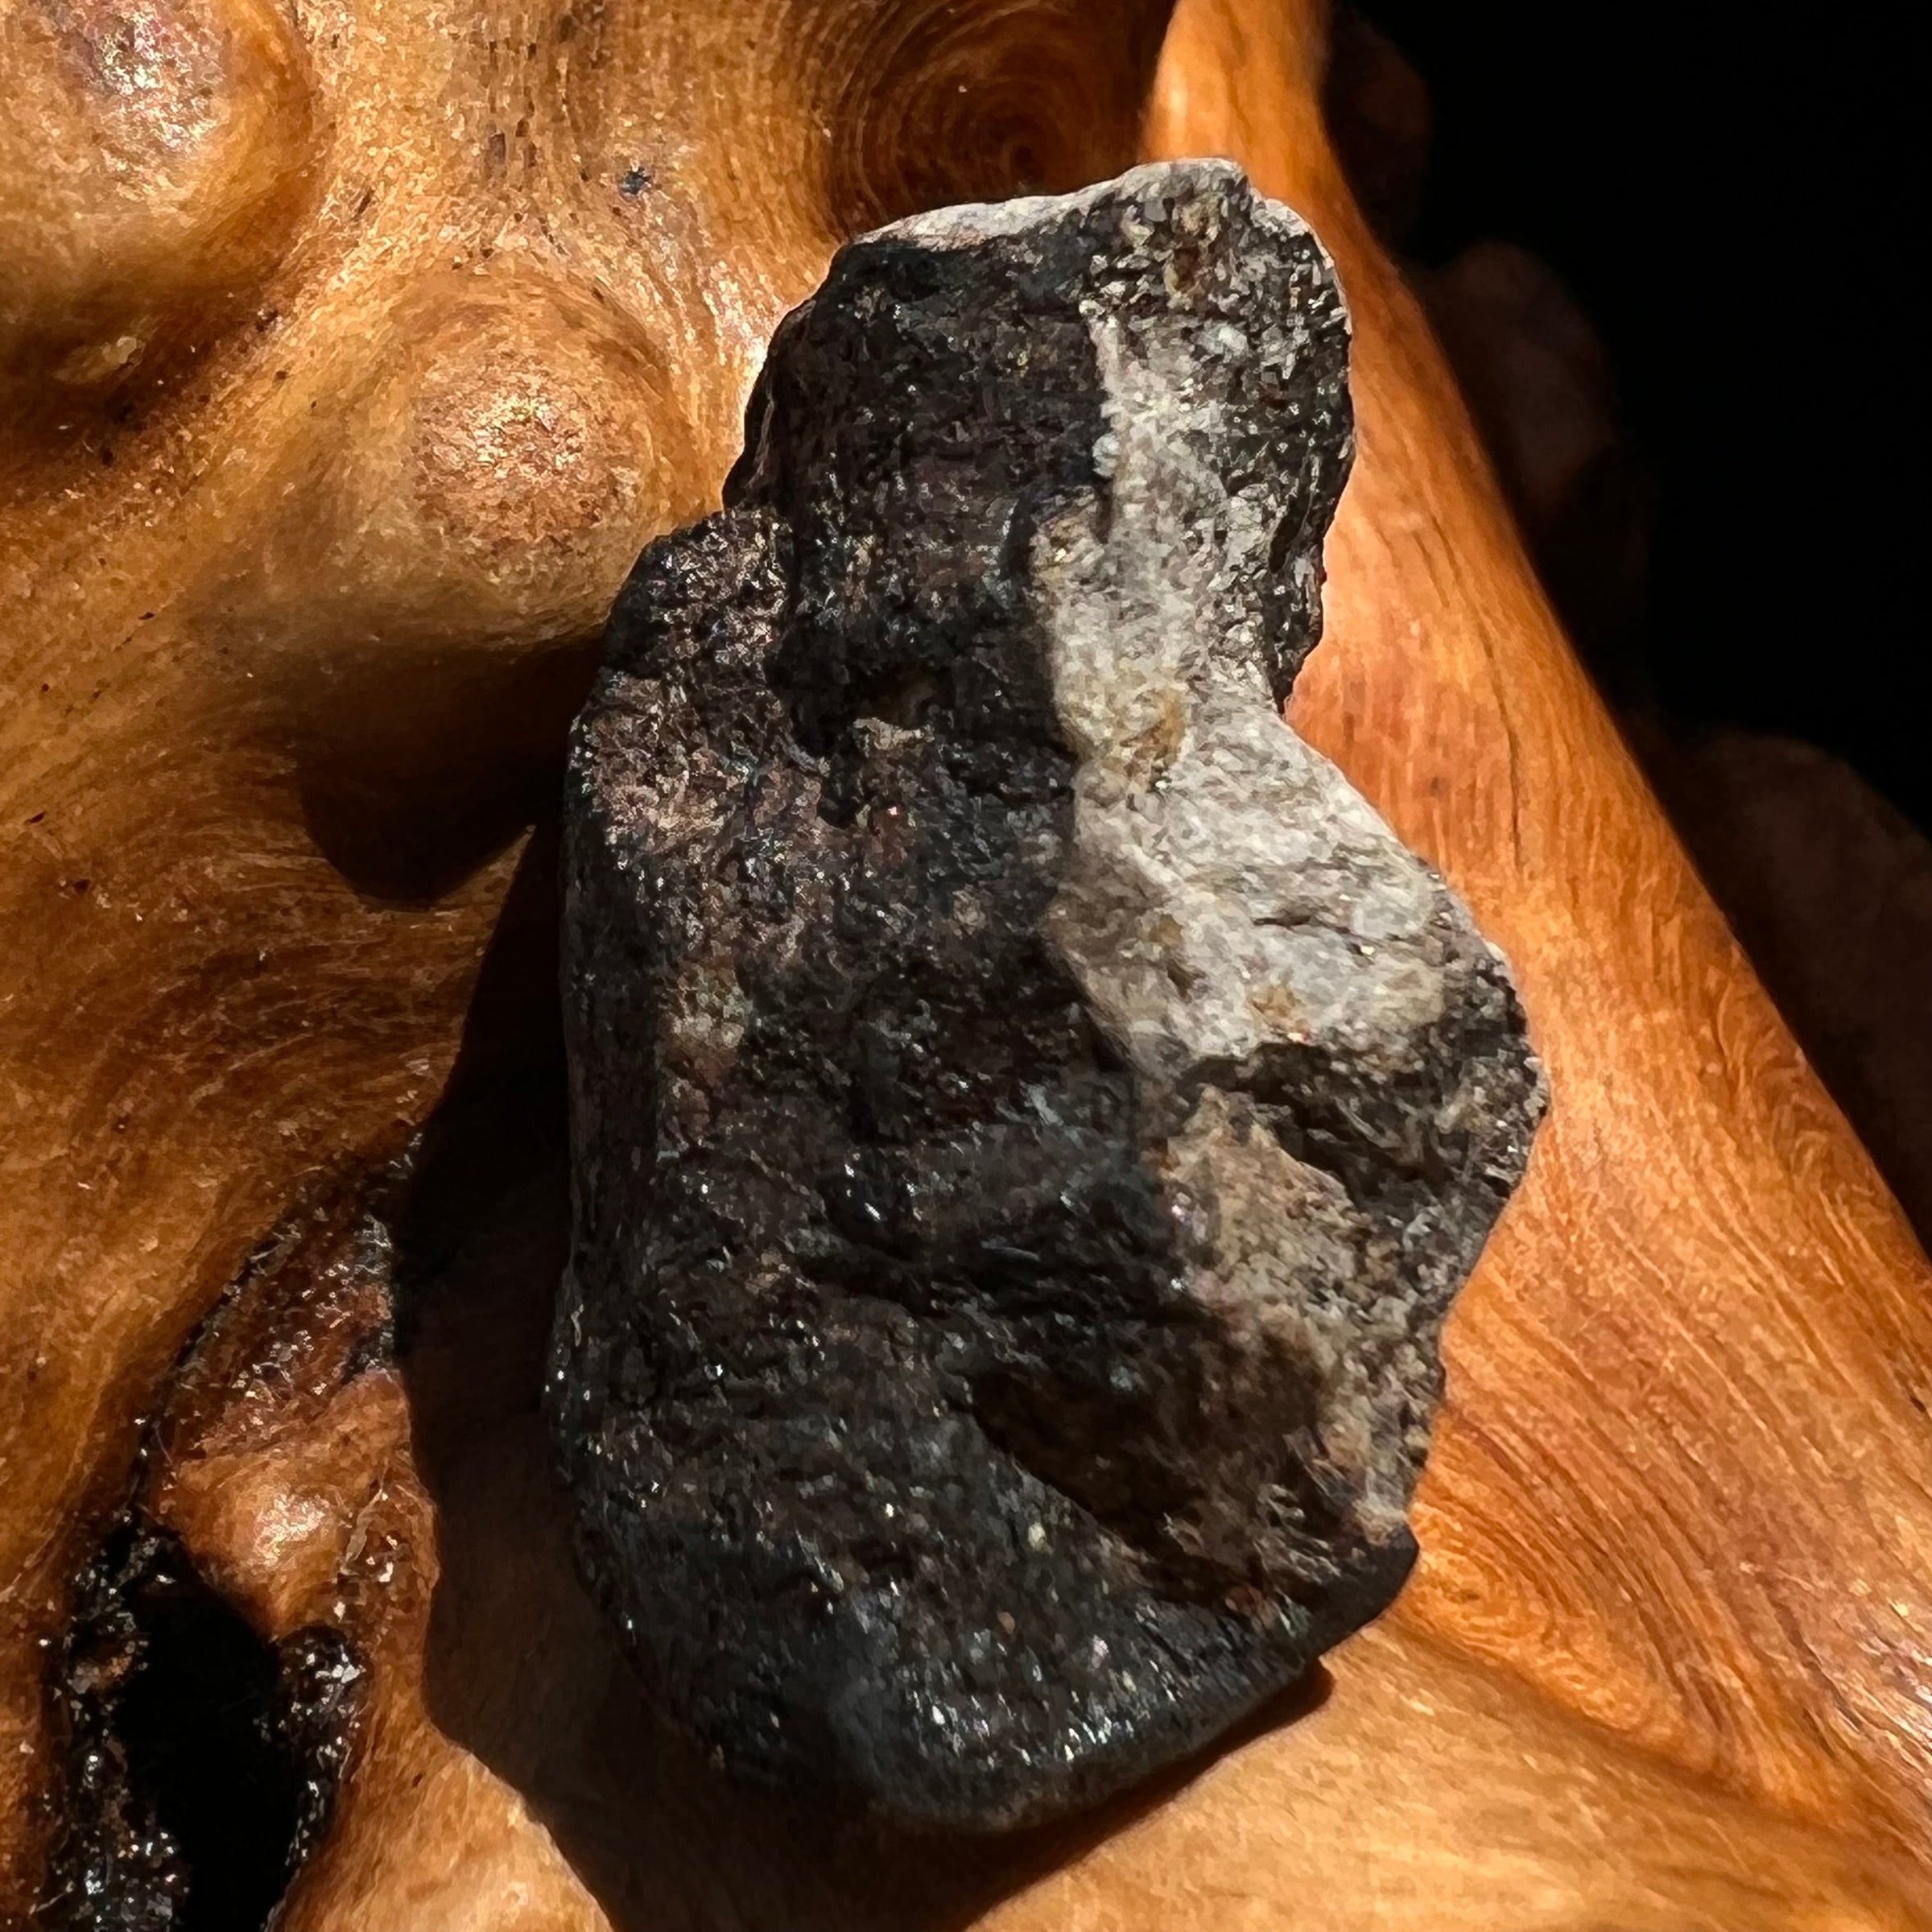 Chelyabinsk Meteorite Superbolide Asteroid 3.2 grams #74-Moldavite Life